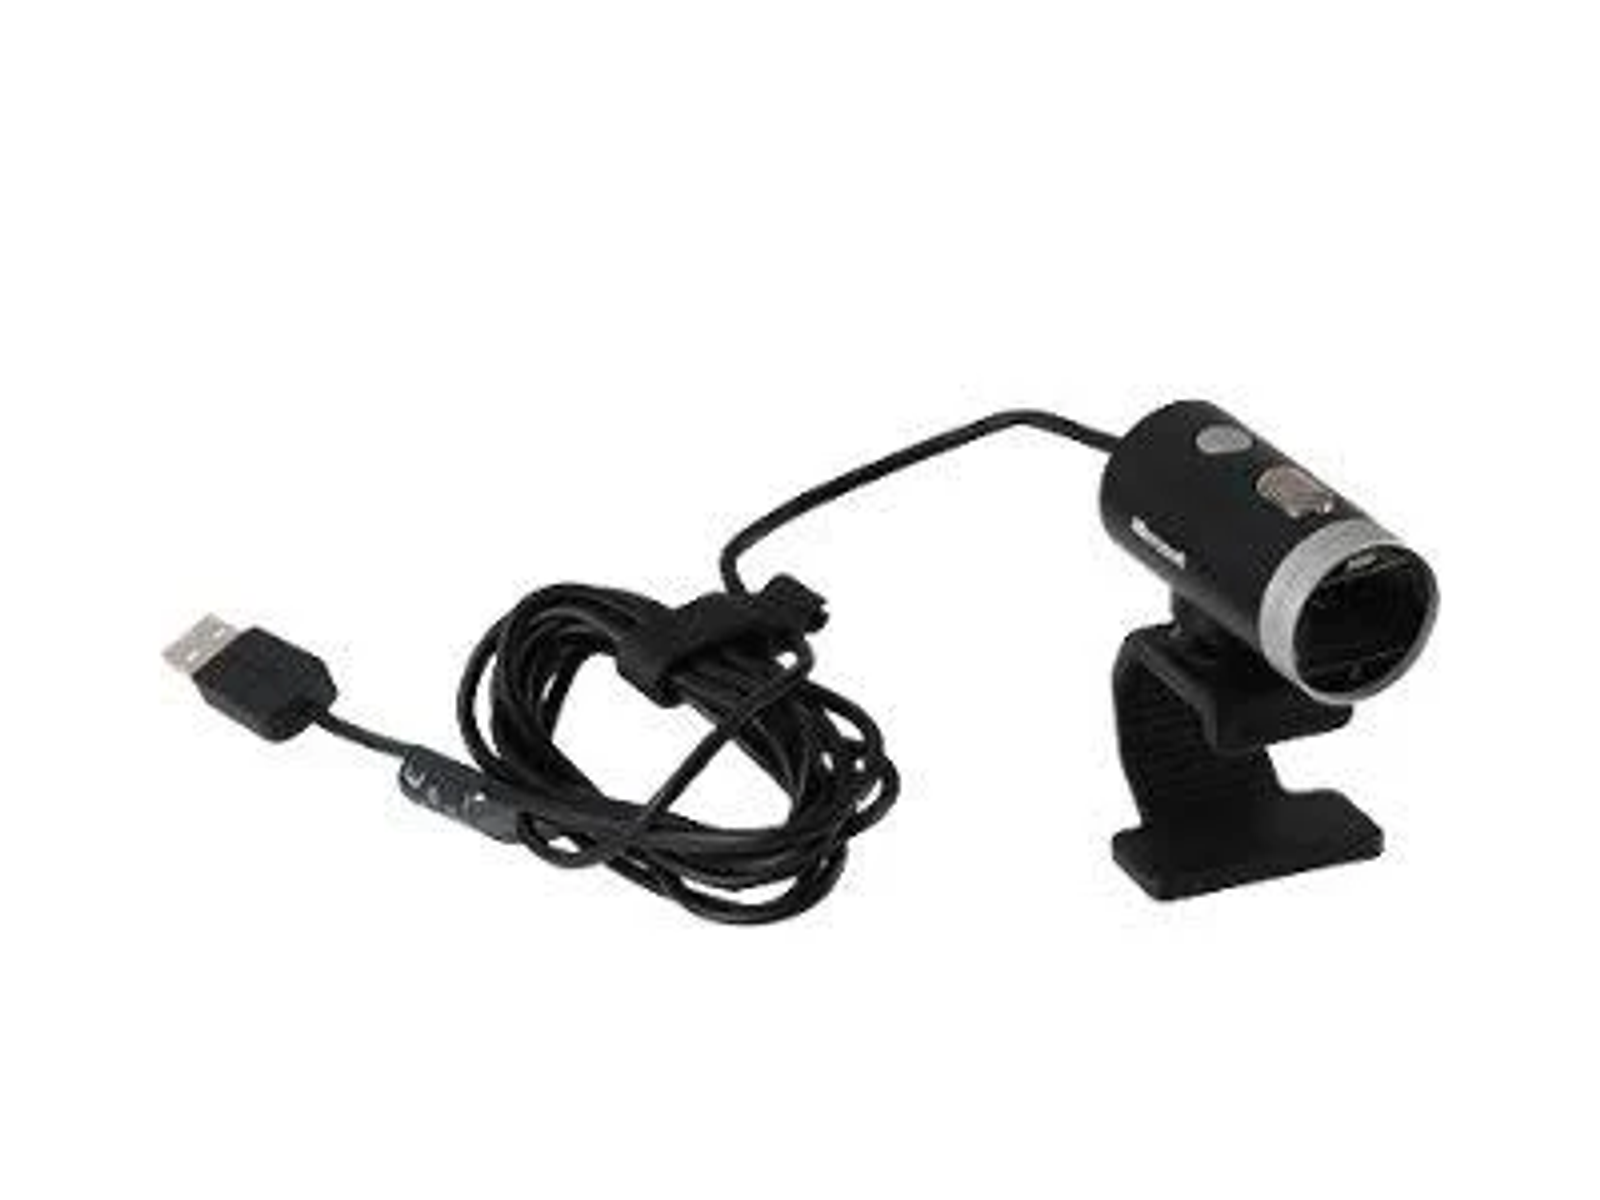 MICROSOFT H5D-00014 LIFECAM Webcam USB PORT WIN CINEMA